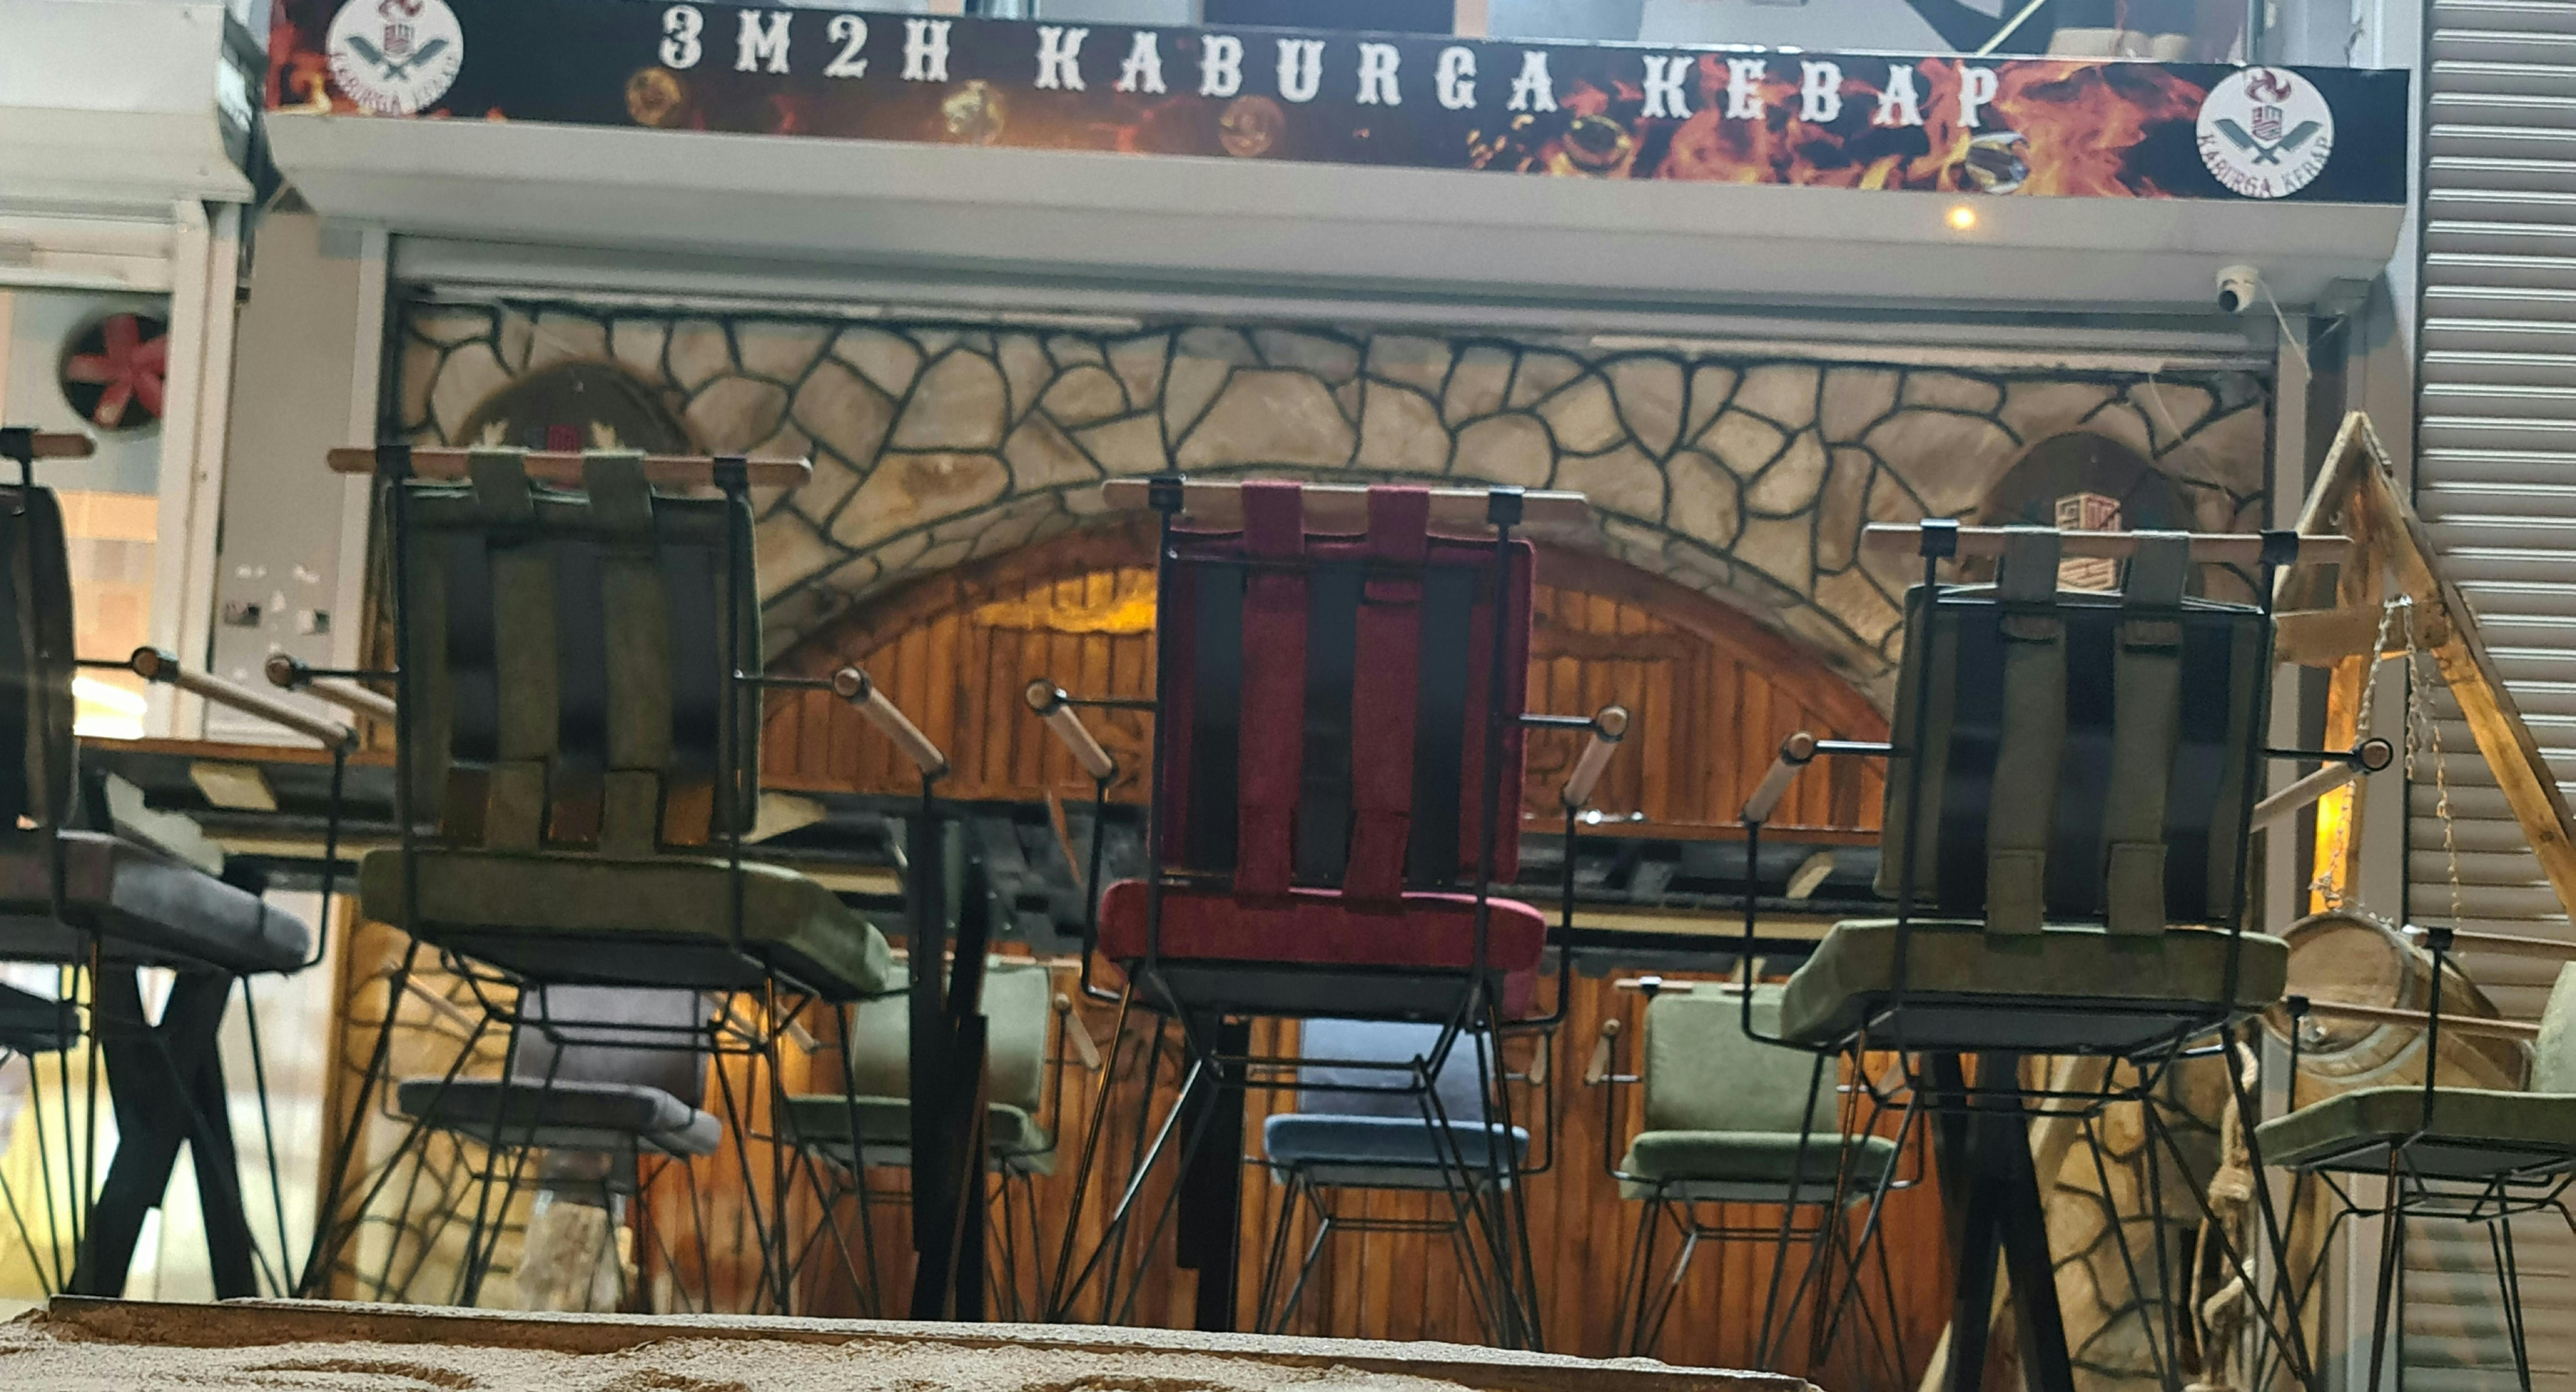 Photo of restaurant Kaburga Kebap 3m2h in Bahçelievler, Merkez